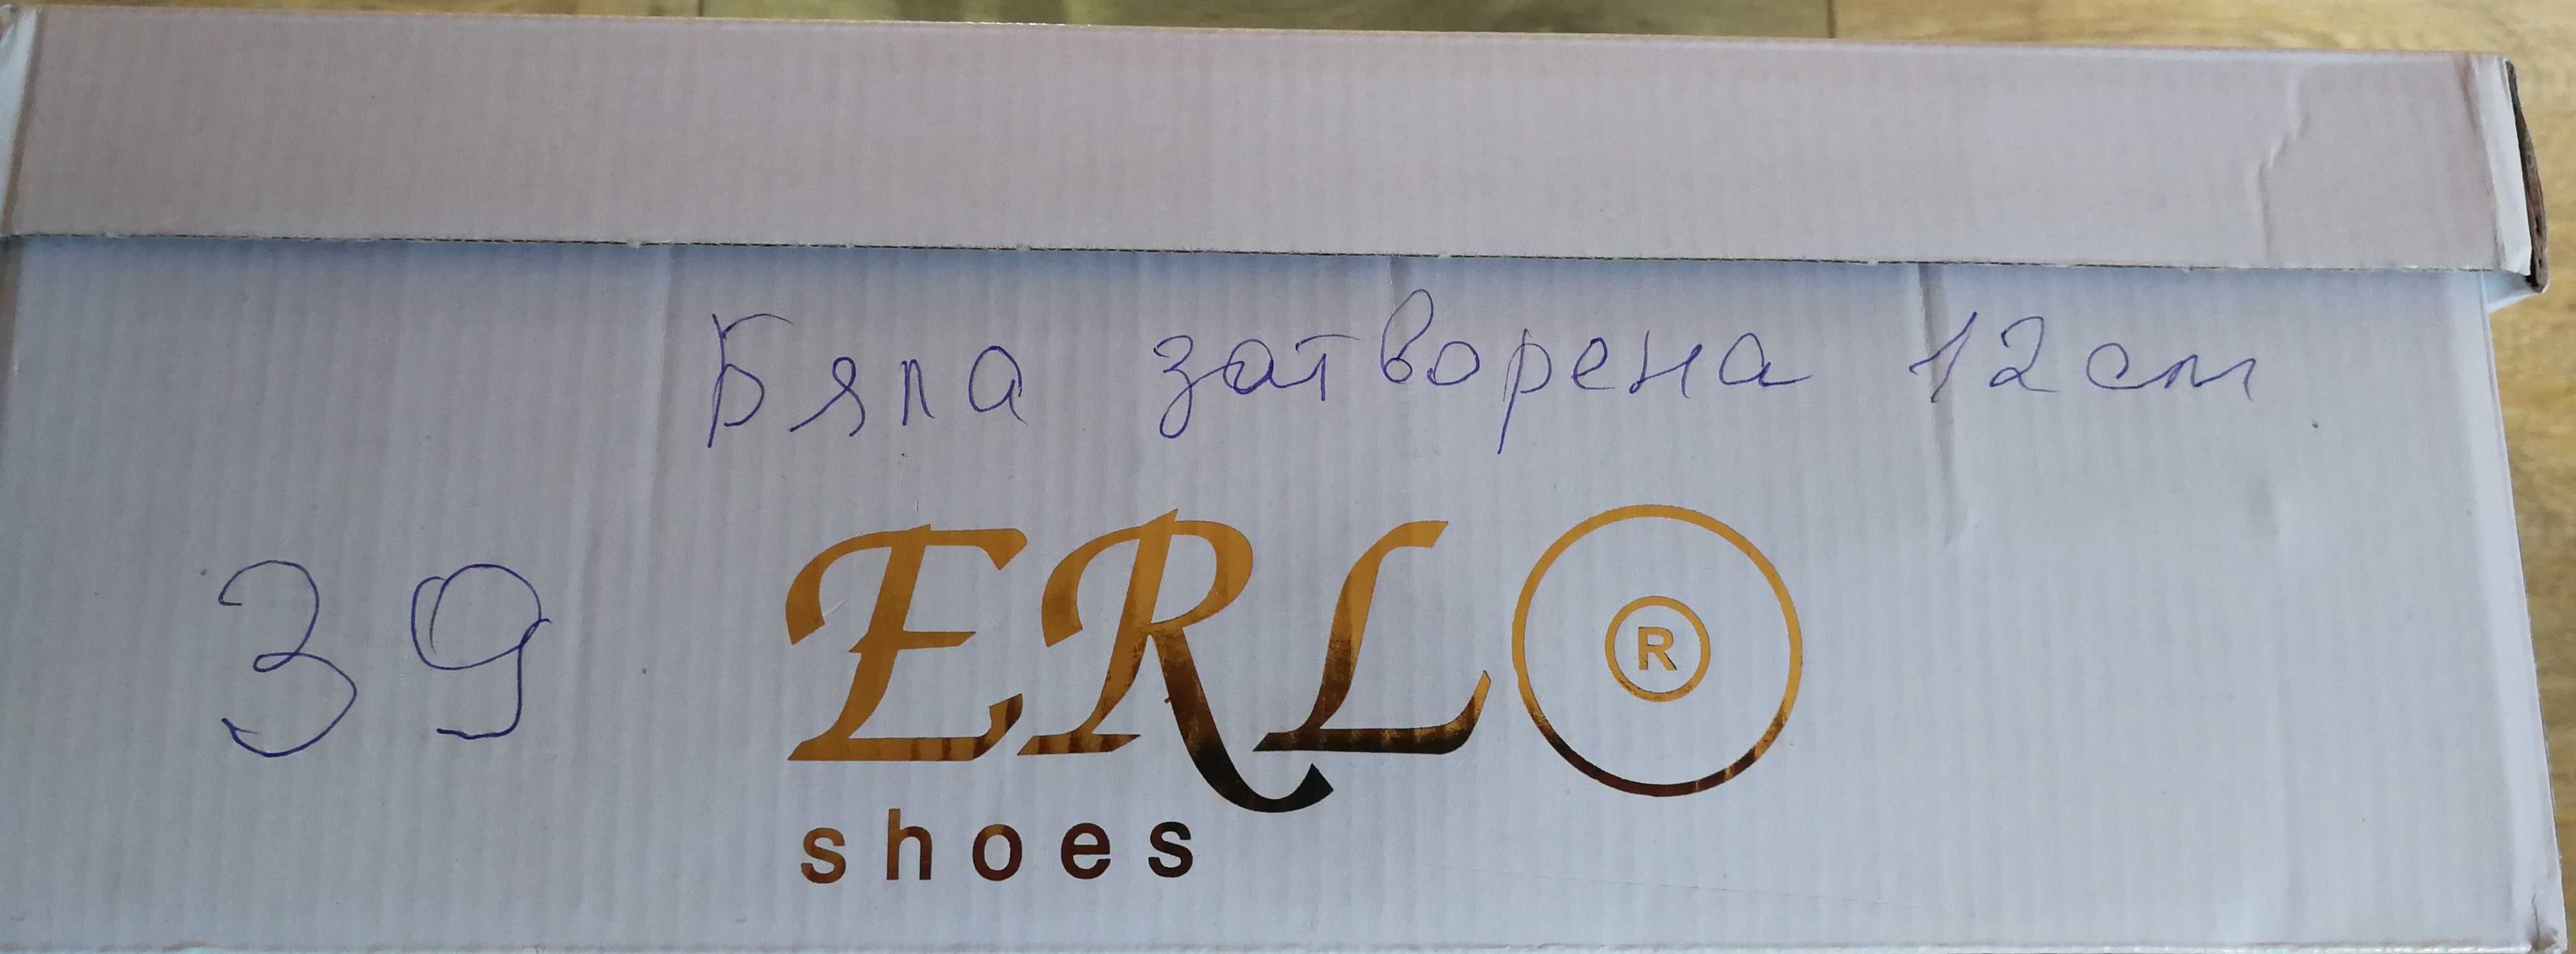 Официални дамски обувки Ерло/Erlo